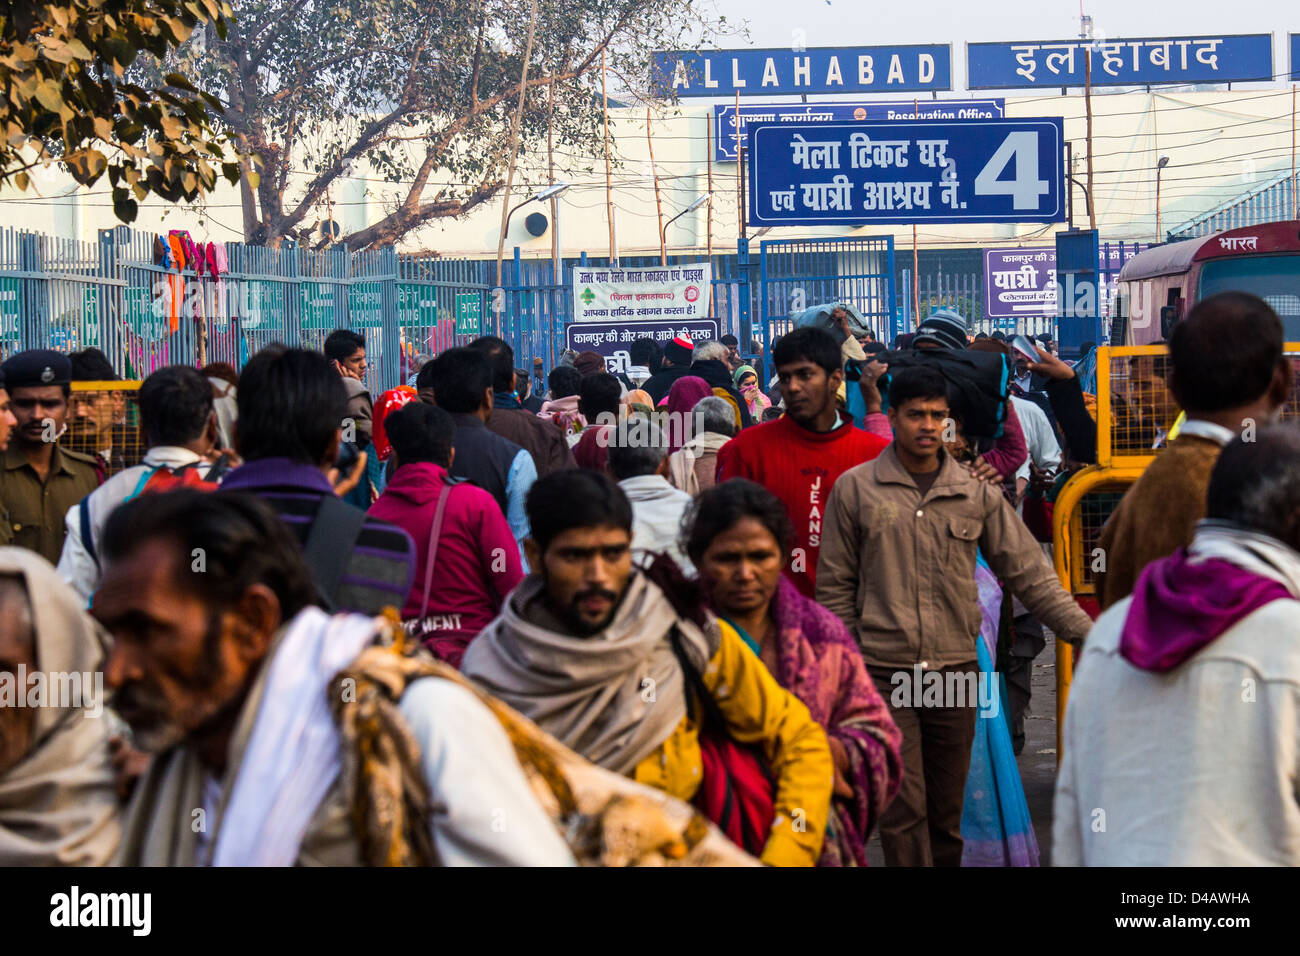 Allahabad Bahnhof während Kumbh Mela, Allahabad, Indien Stockfoto